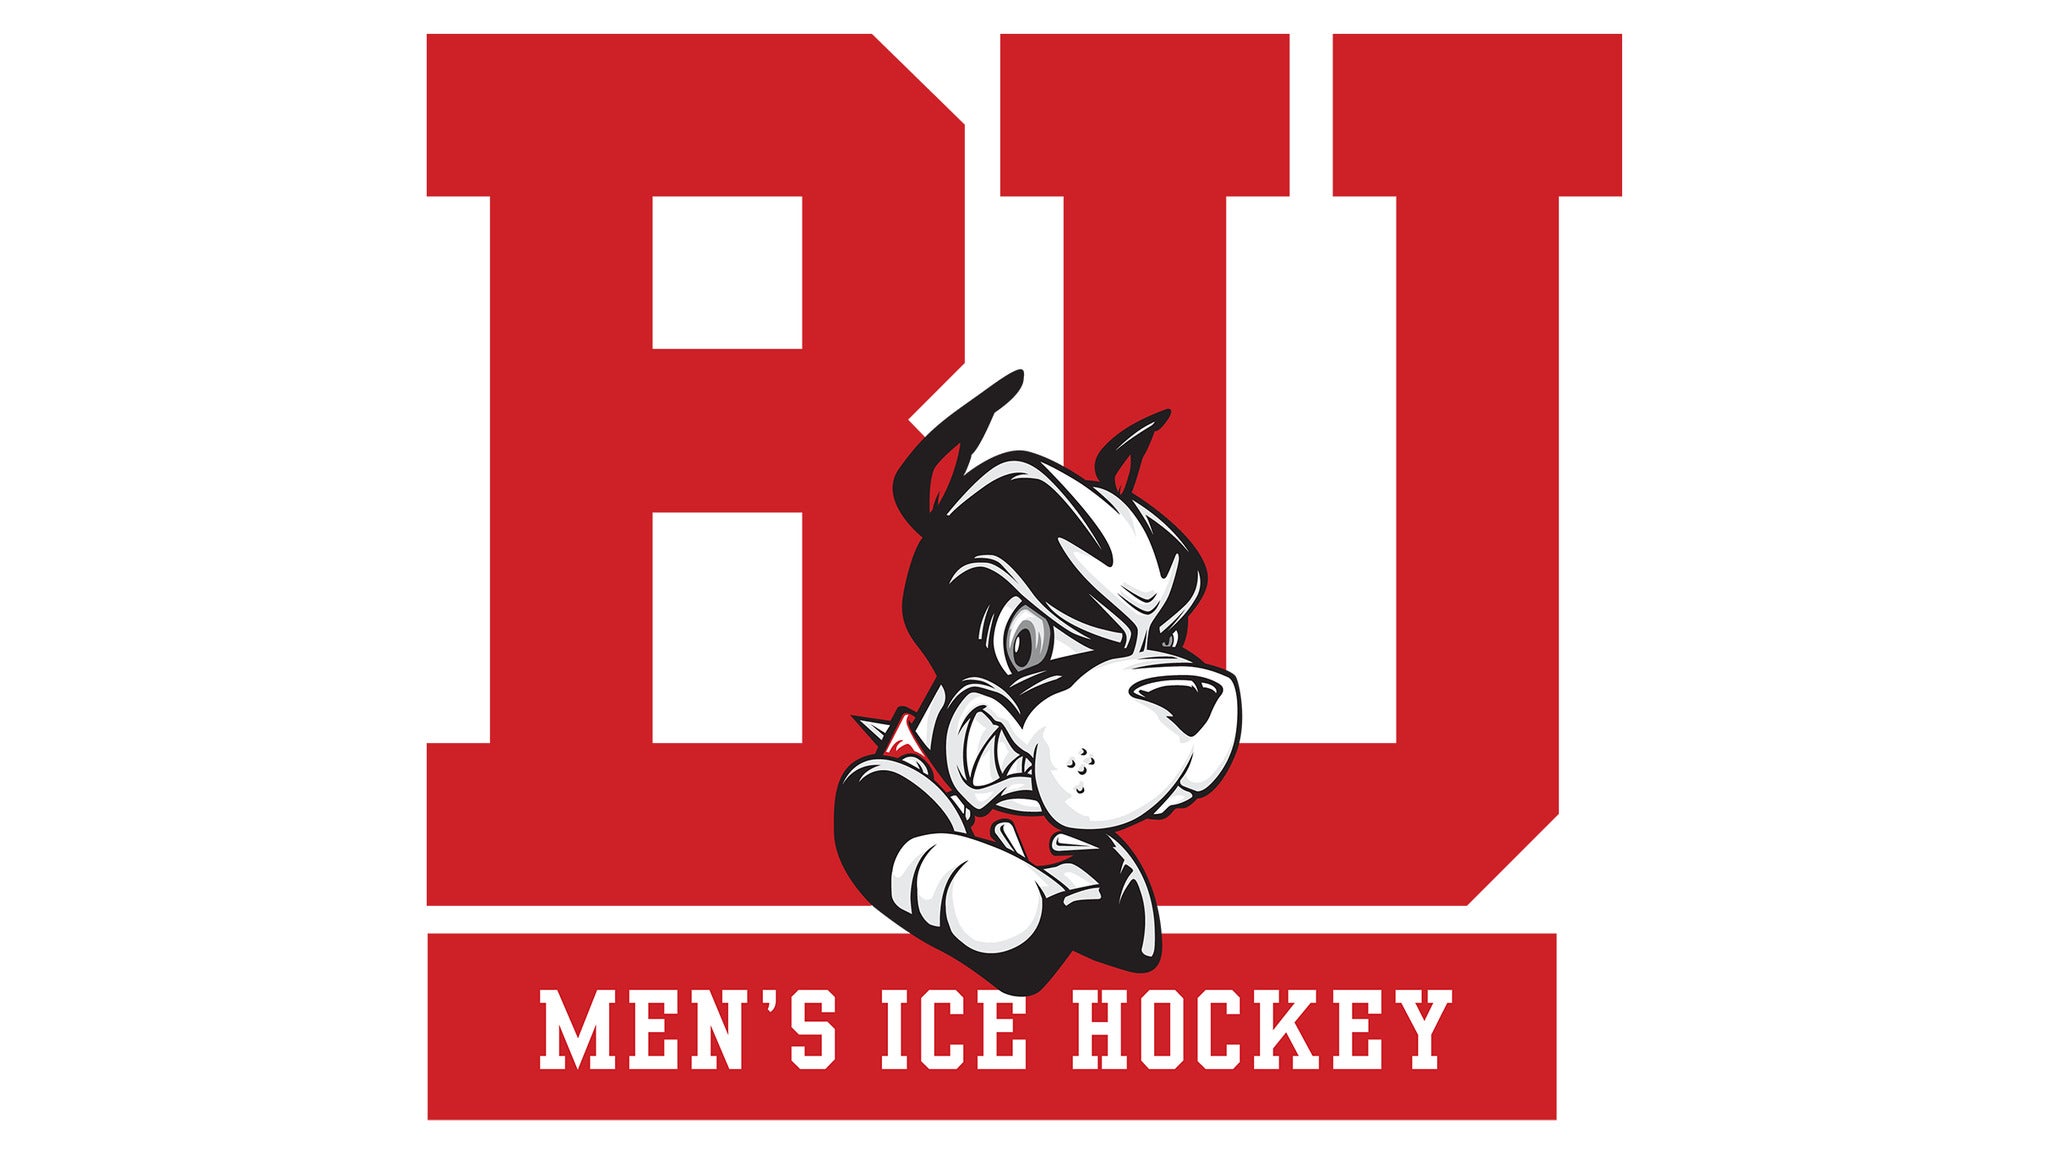 Boston University Men's Hockey vs. USA U-18 Team (EXH.) in Boston event information